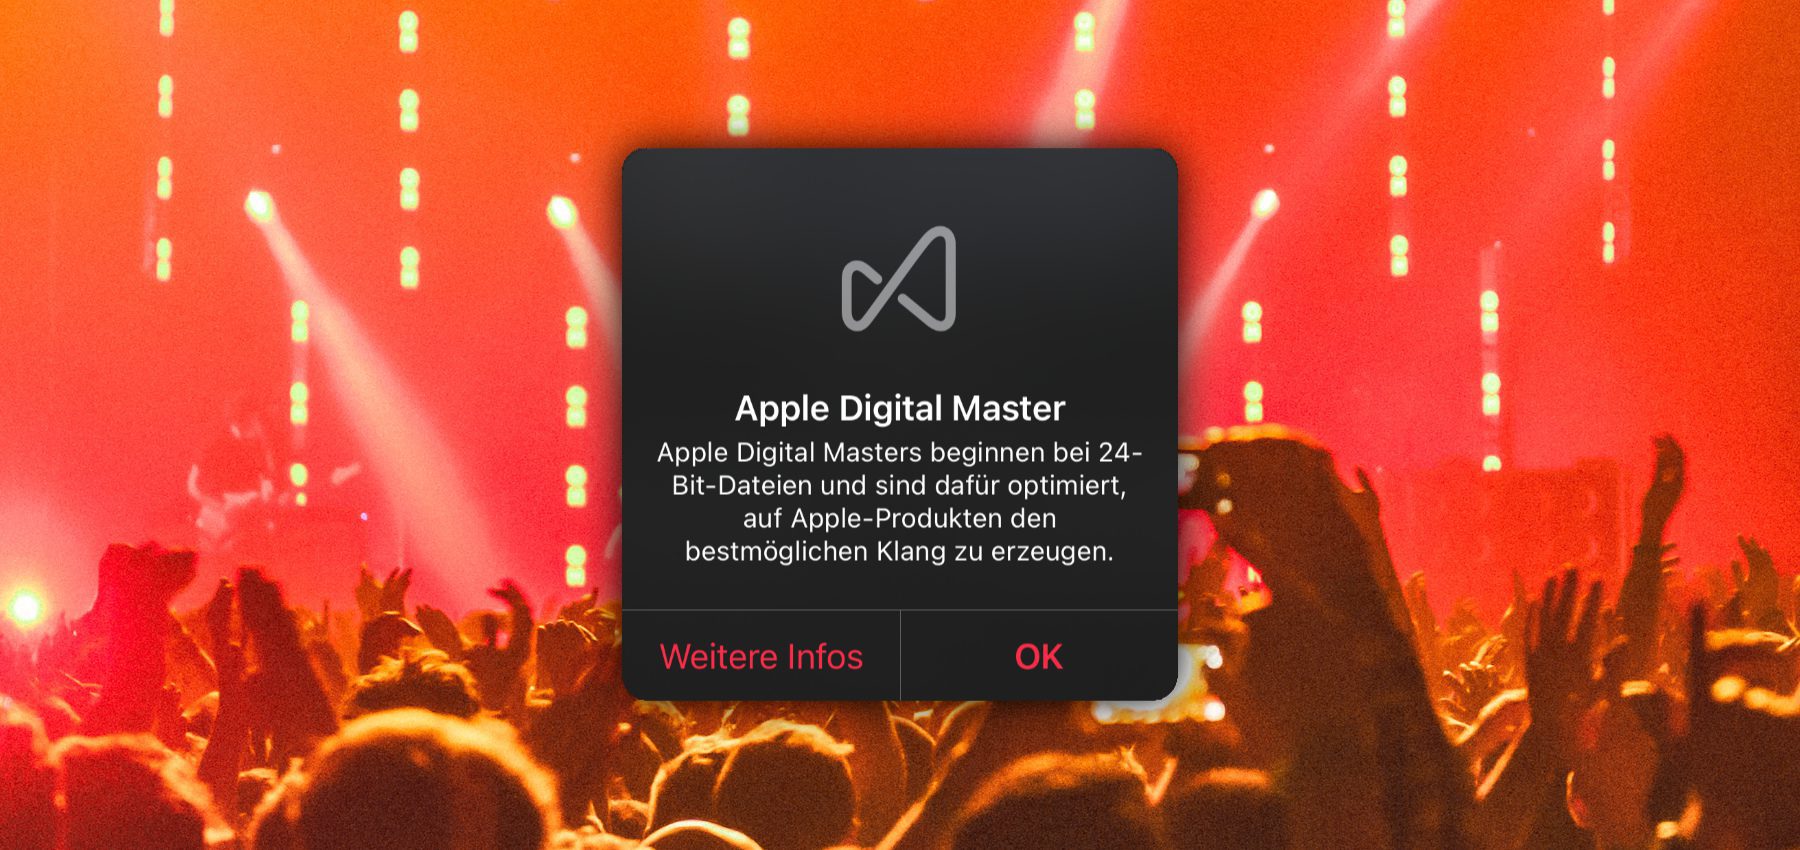 Apple Musik: Was ist Apple Digital Master? » Sir Apfelot